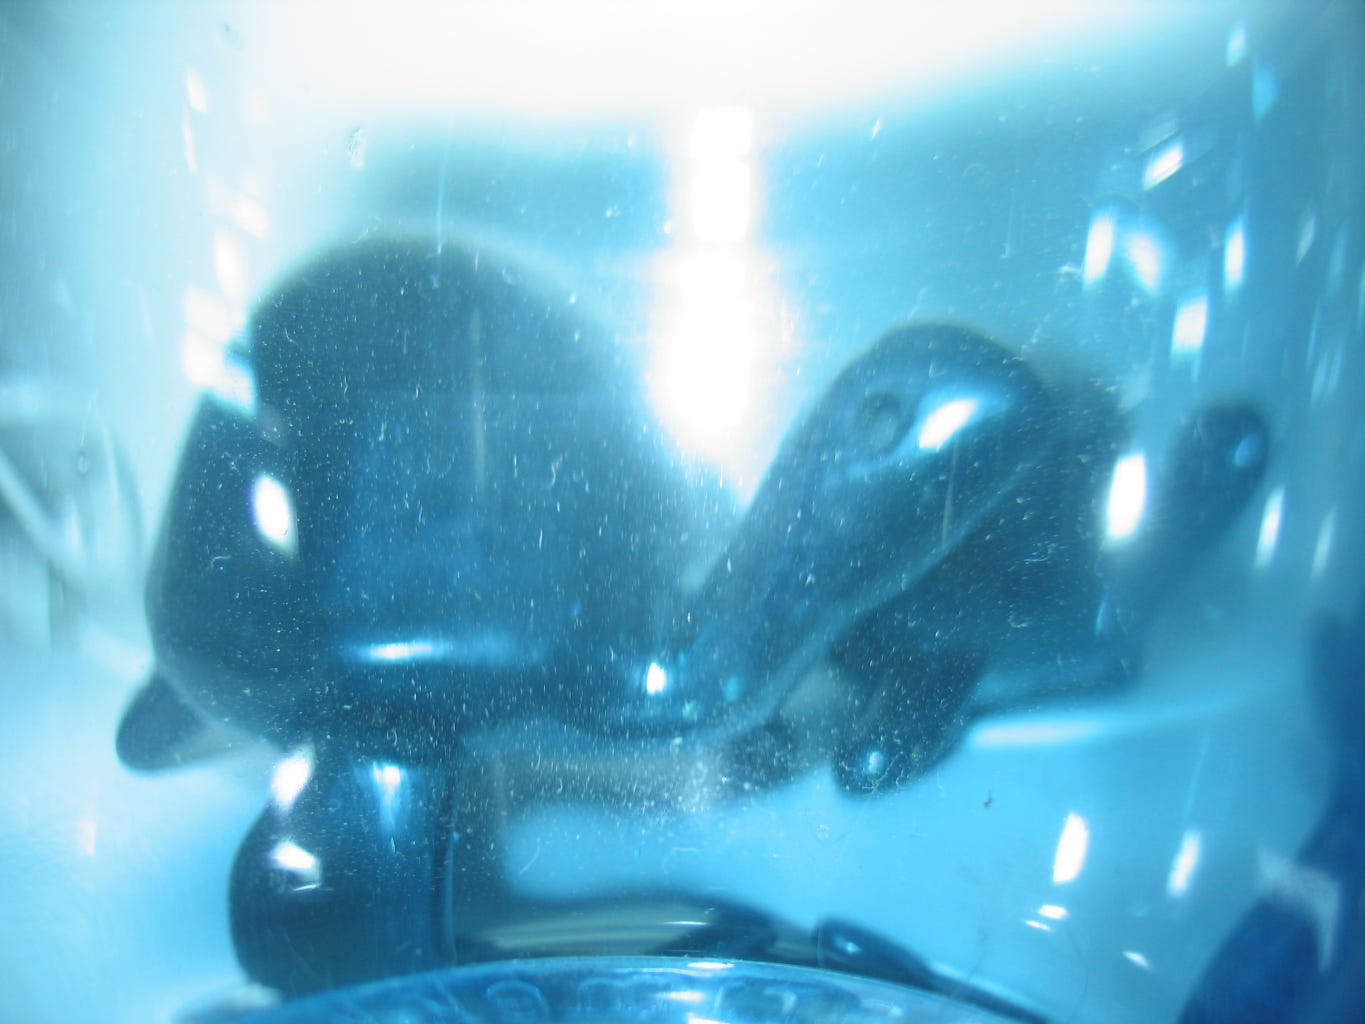 image of ceramic turtles photographed through a hazy blue glass